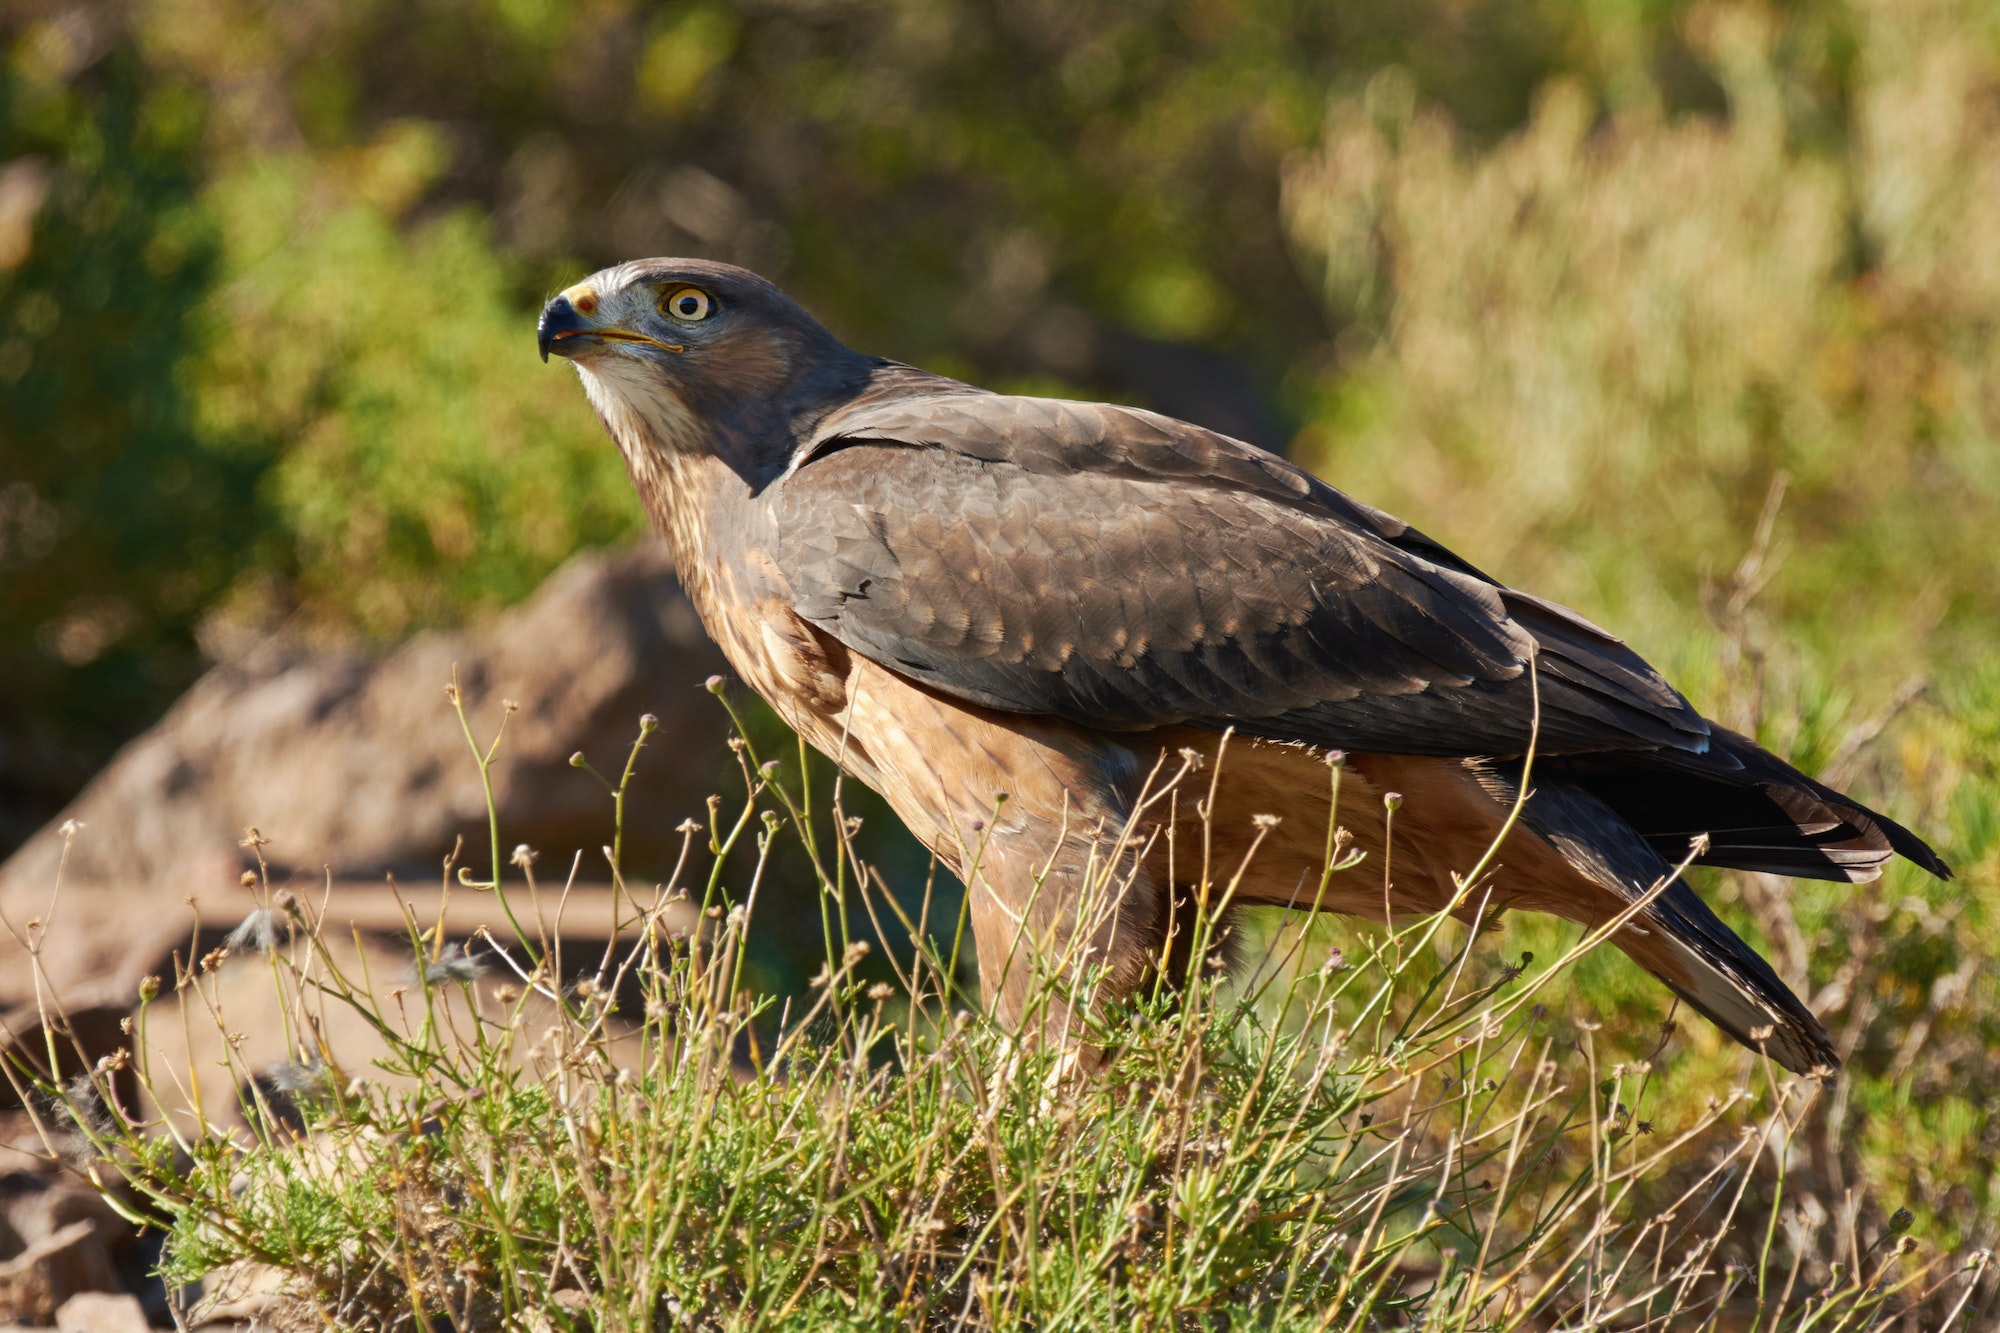 Predator of the skies - Hawk. Shot of a majestic bird of prey.